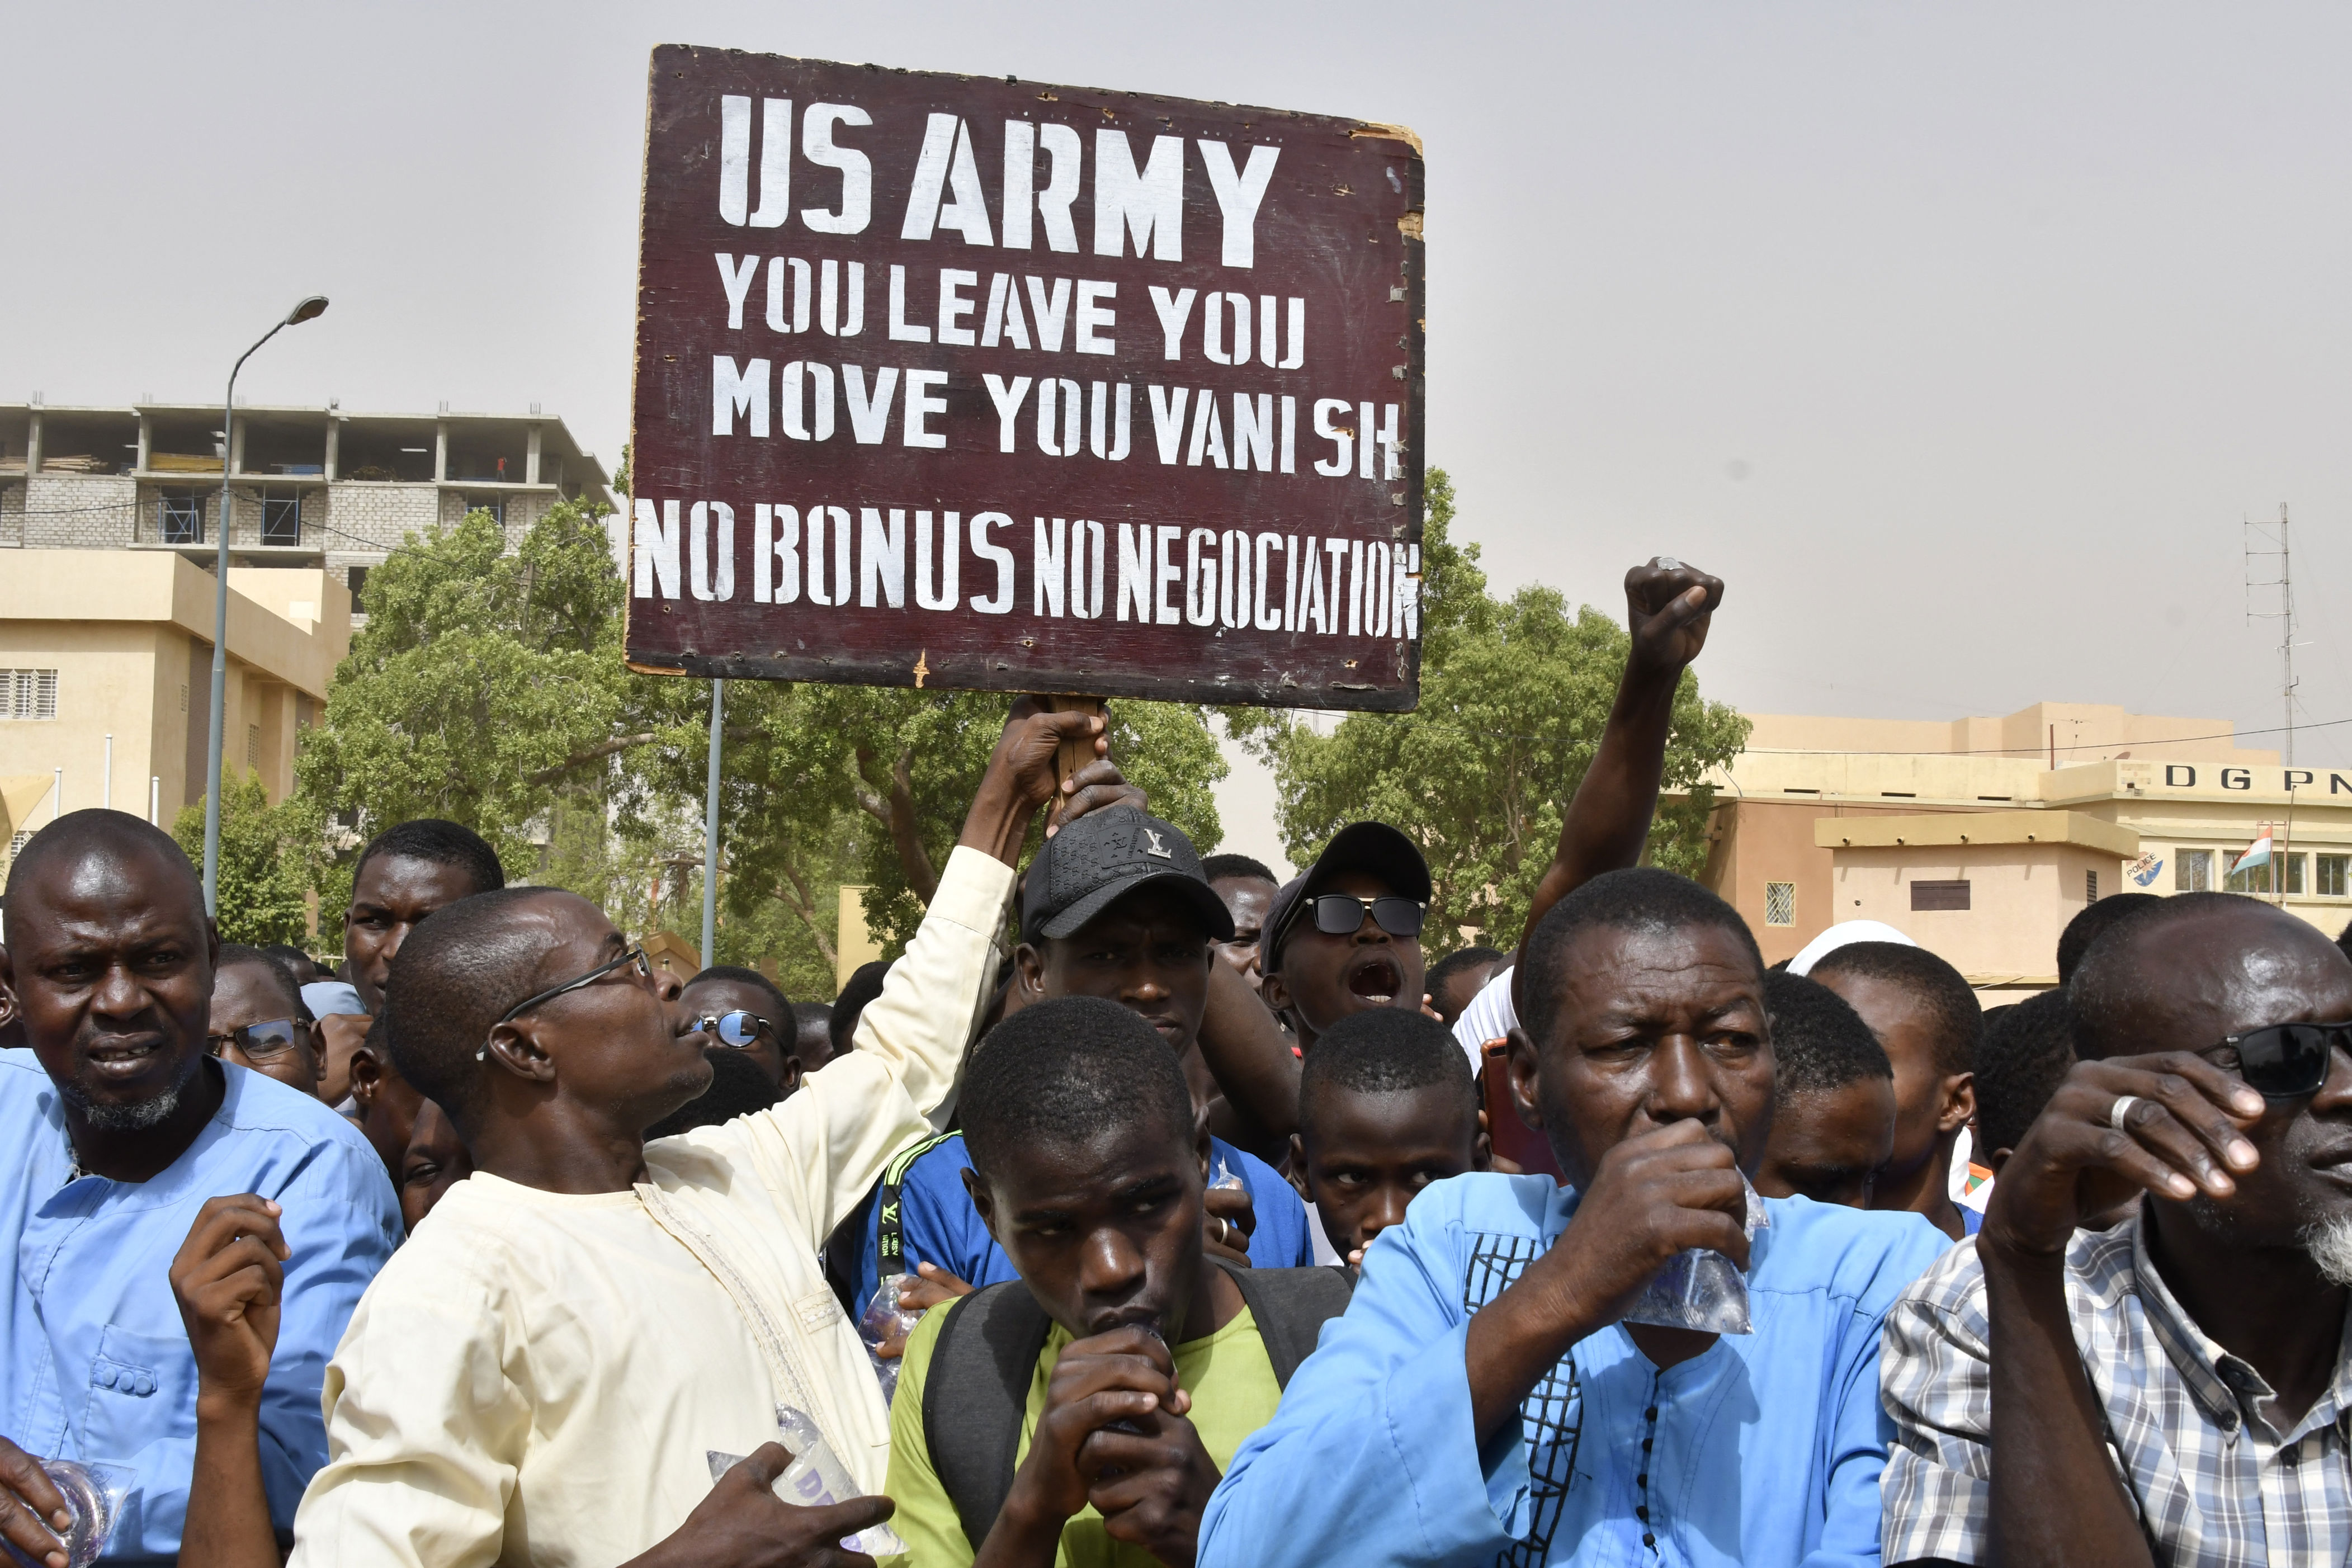 hundreds protest in niger demanding departure of us troops